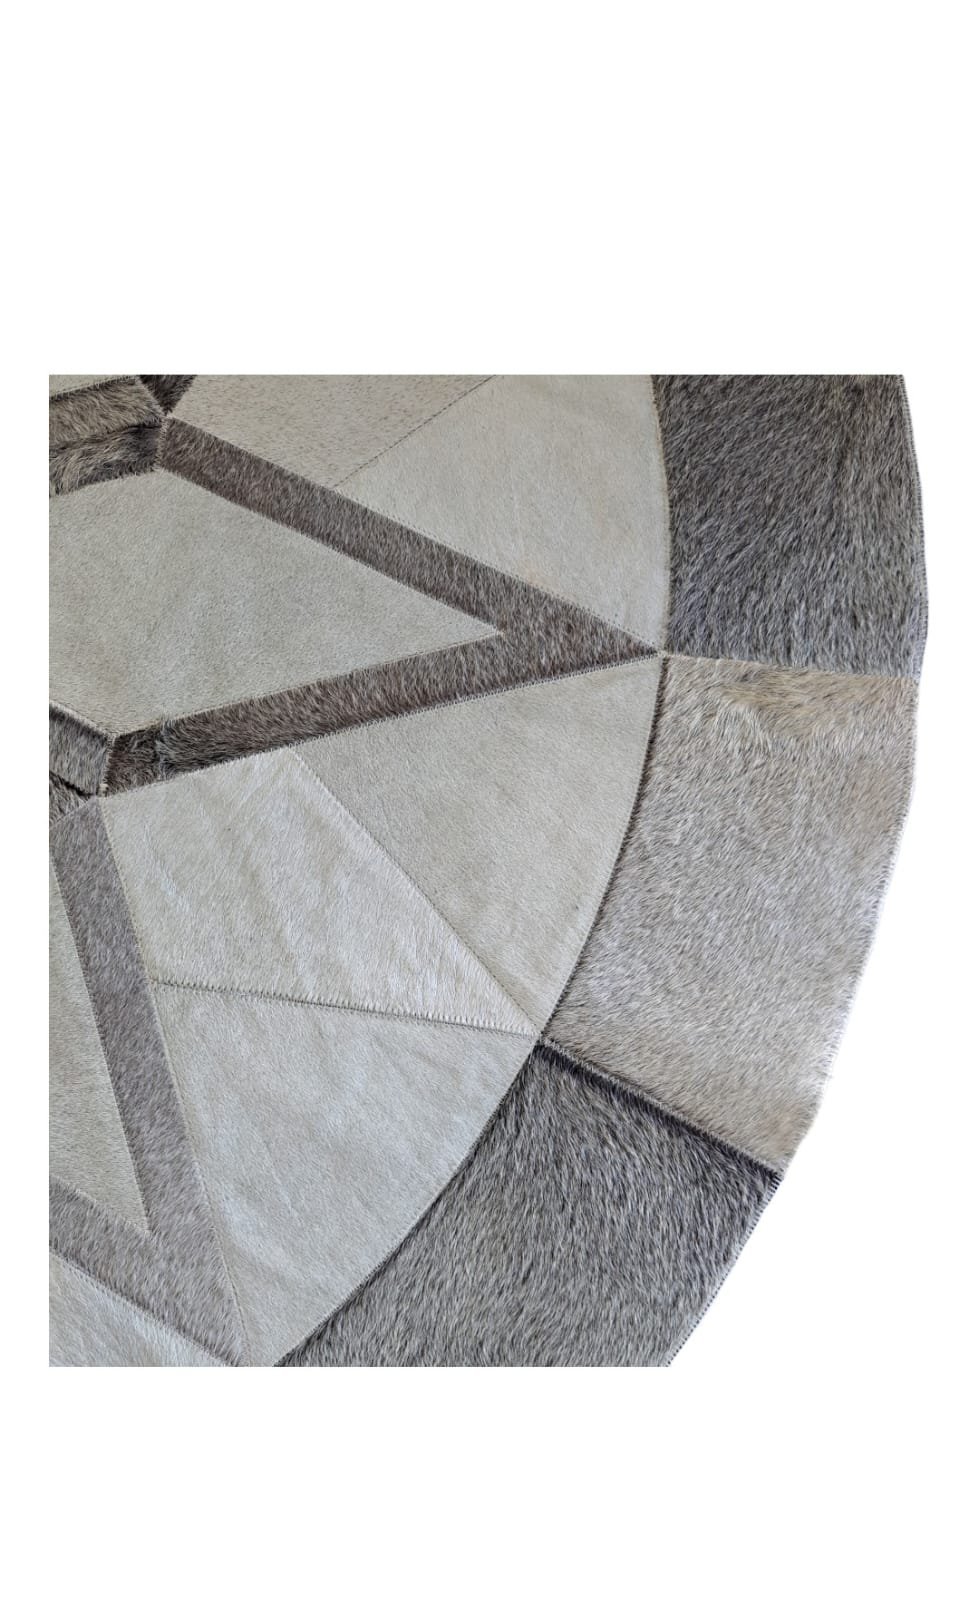 Tapete de Couro Natural Mandala Cinza Branco 1,60 M de Diametro, - 2